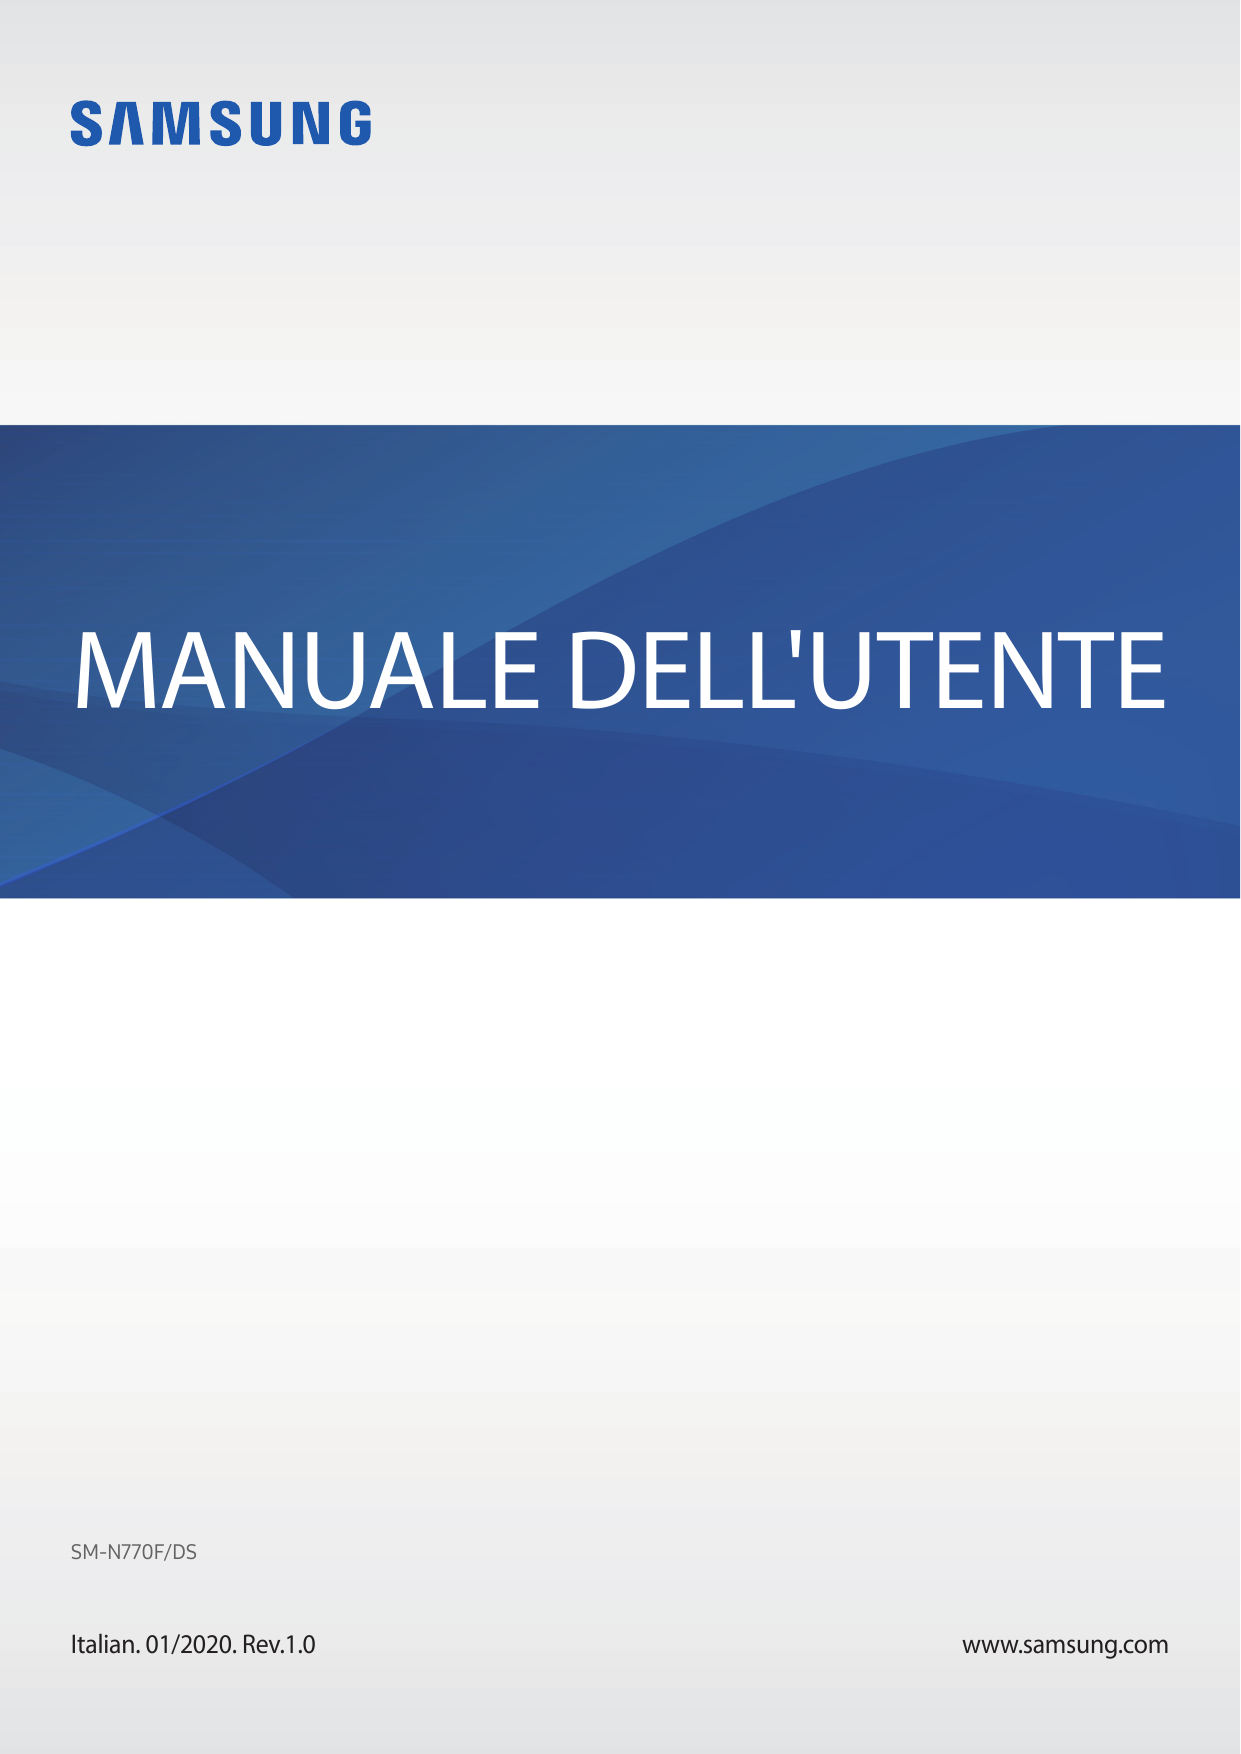 MANUALE DELL'UTENTESM-N770F/DSItalian. 01/2020. Rev.1.0www.samsung.com